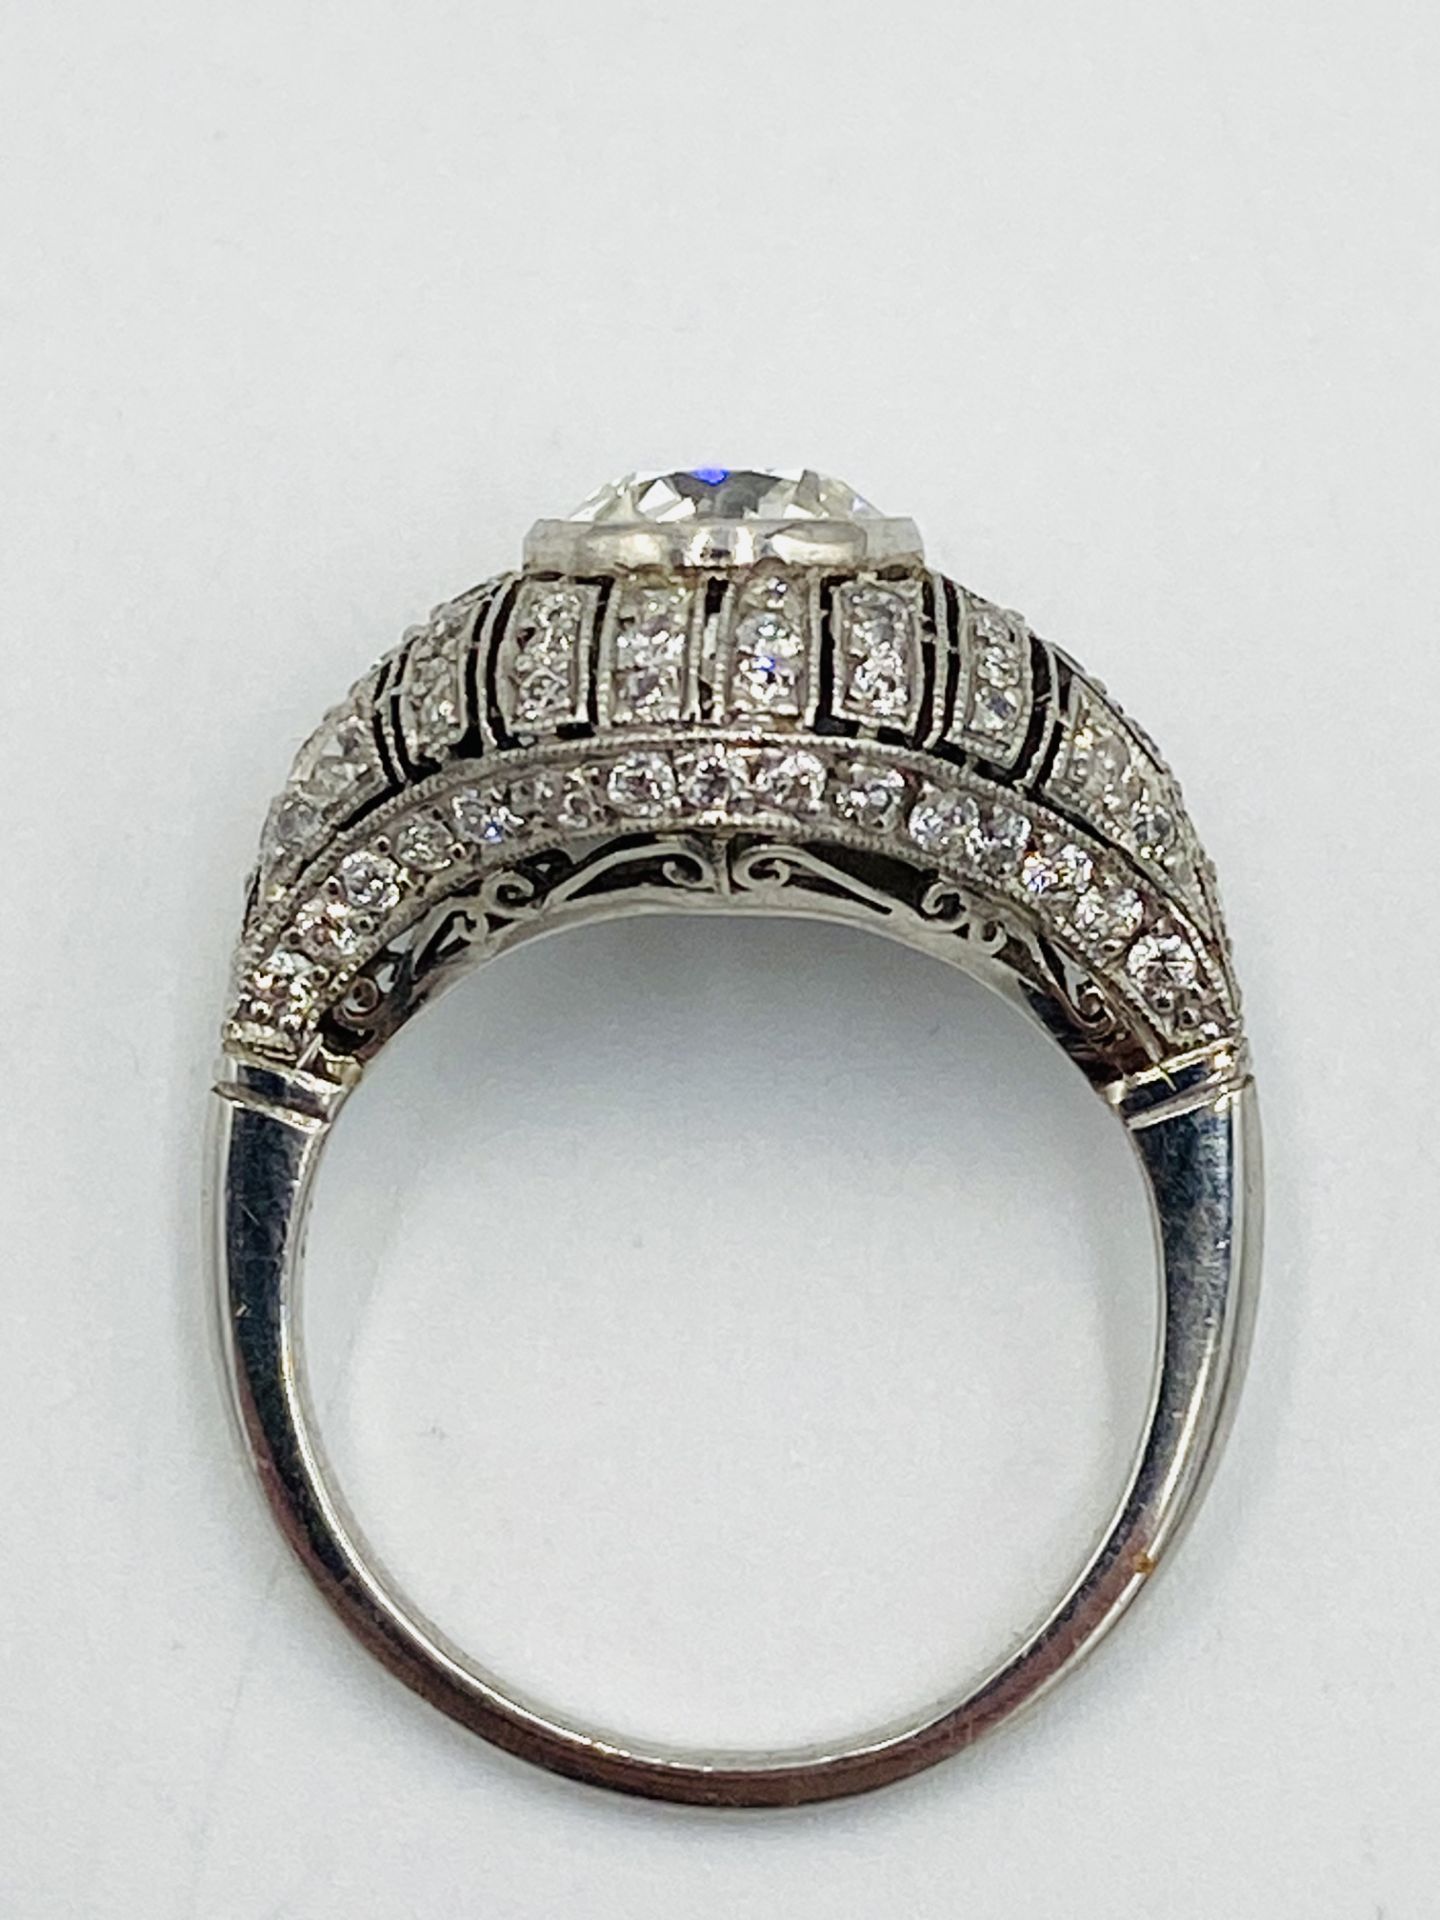 Platinum and diamond ring - Image 5 of 6